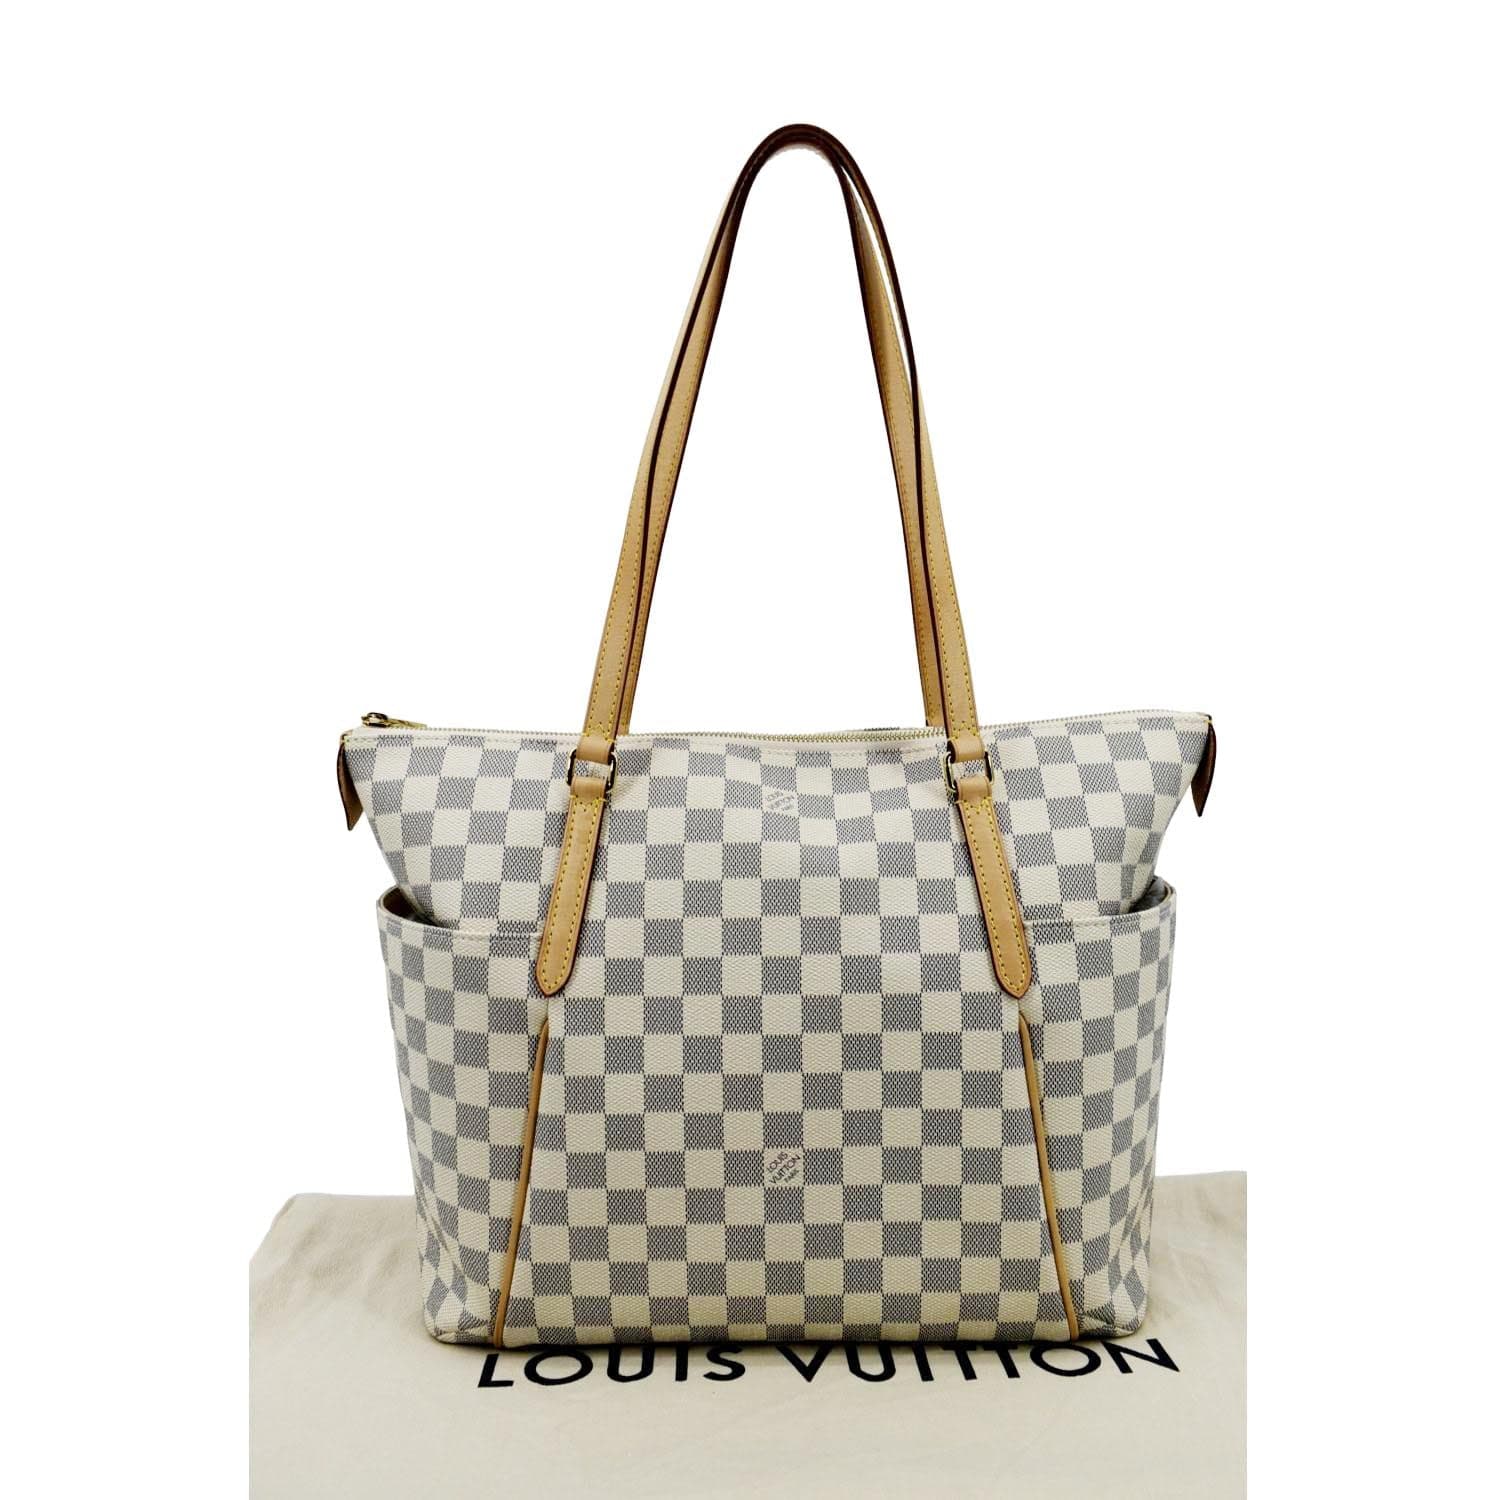 LOUIS VUITTON Tote Bag Totally MM White Damier Azur Shoulder Bag